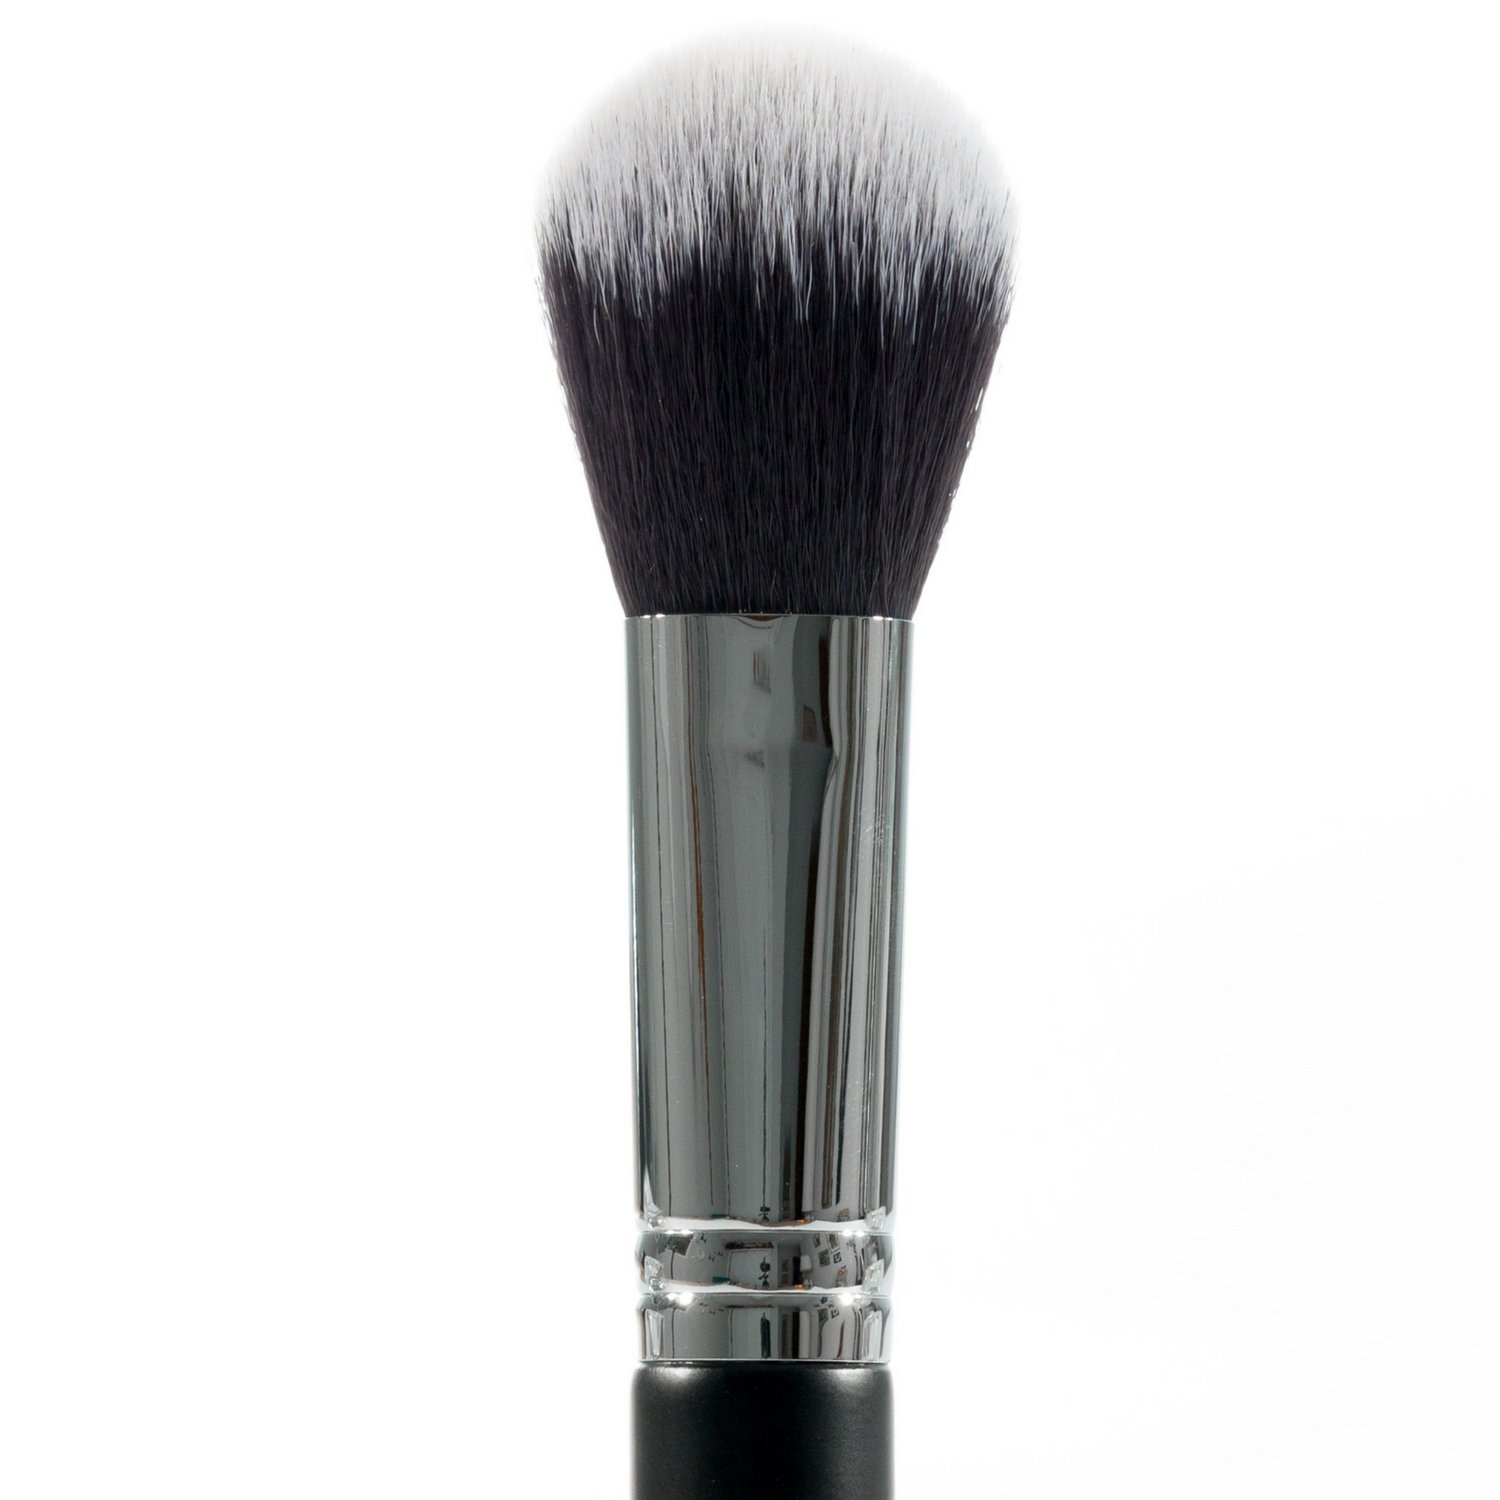 Powder Blush Bronzer Makeup Brush – Large Fluffy Domed Multitasker Make Up Brushes, Cheek Blusher, Contour, Blending, Setting Loose, Compact, Translucent, Minerals, Soft Synthetic Vegan Cruelty Free